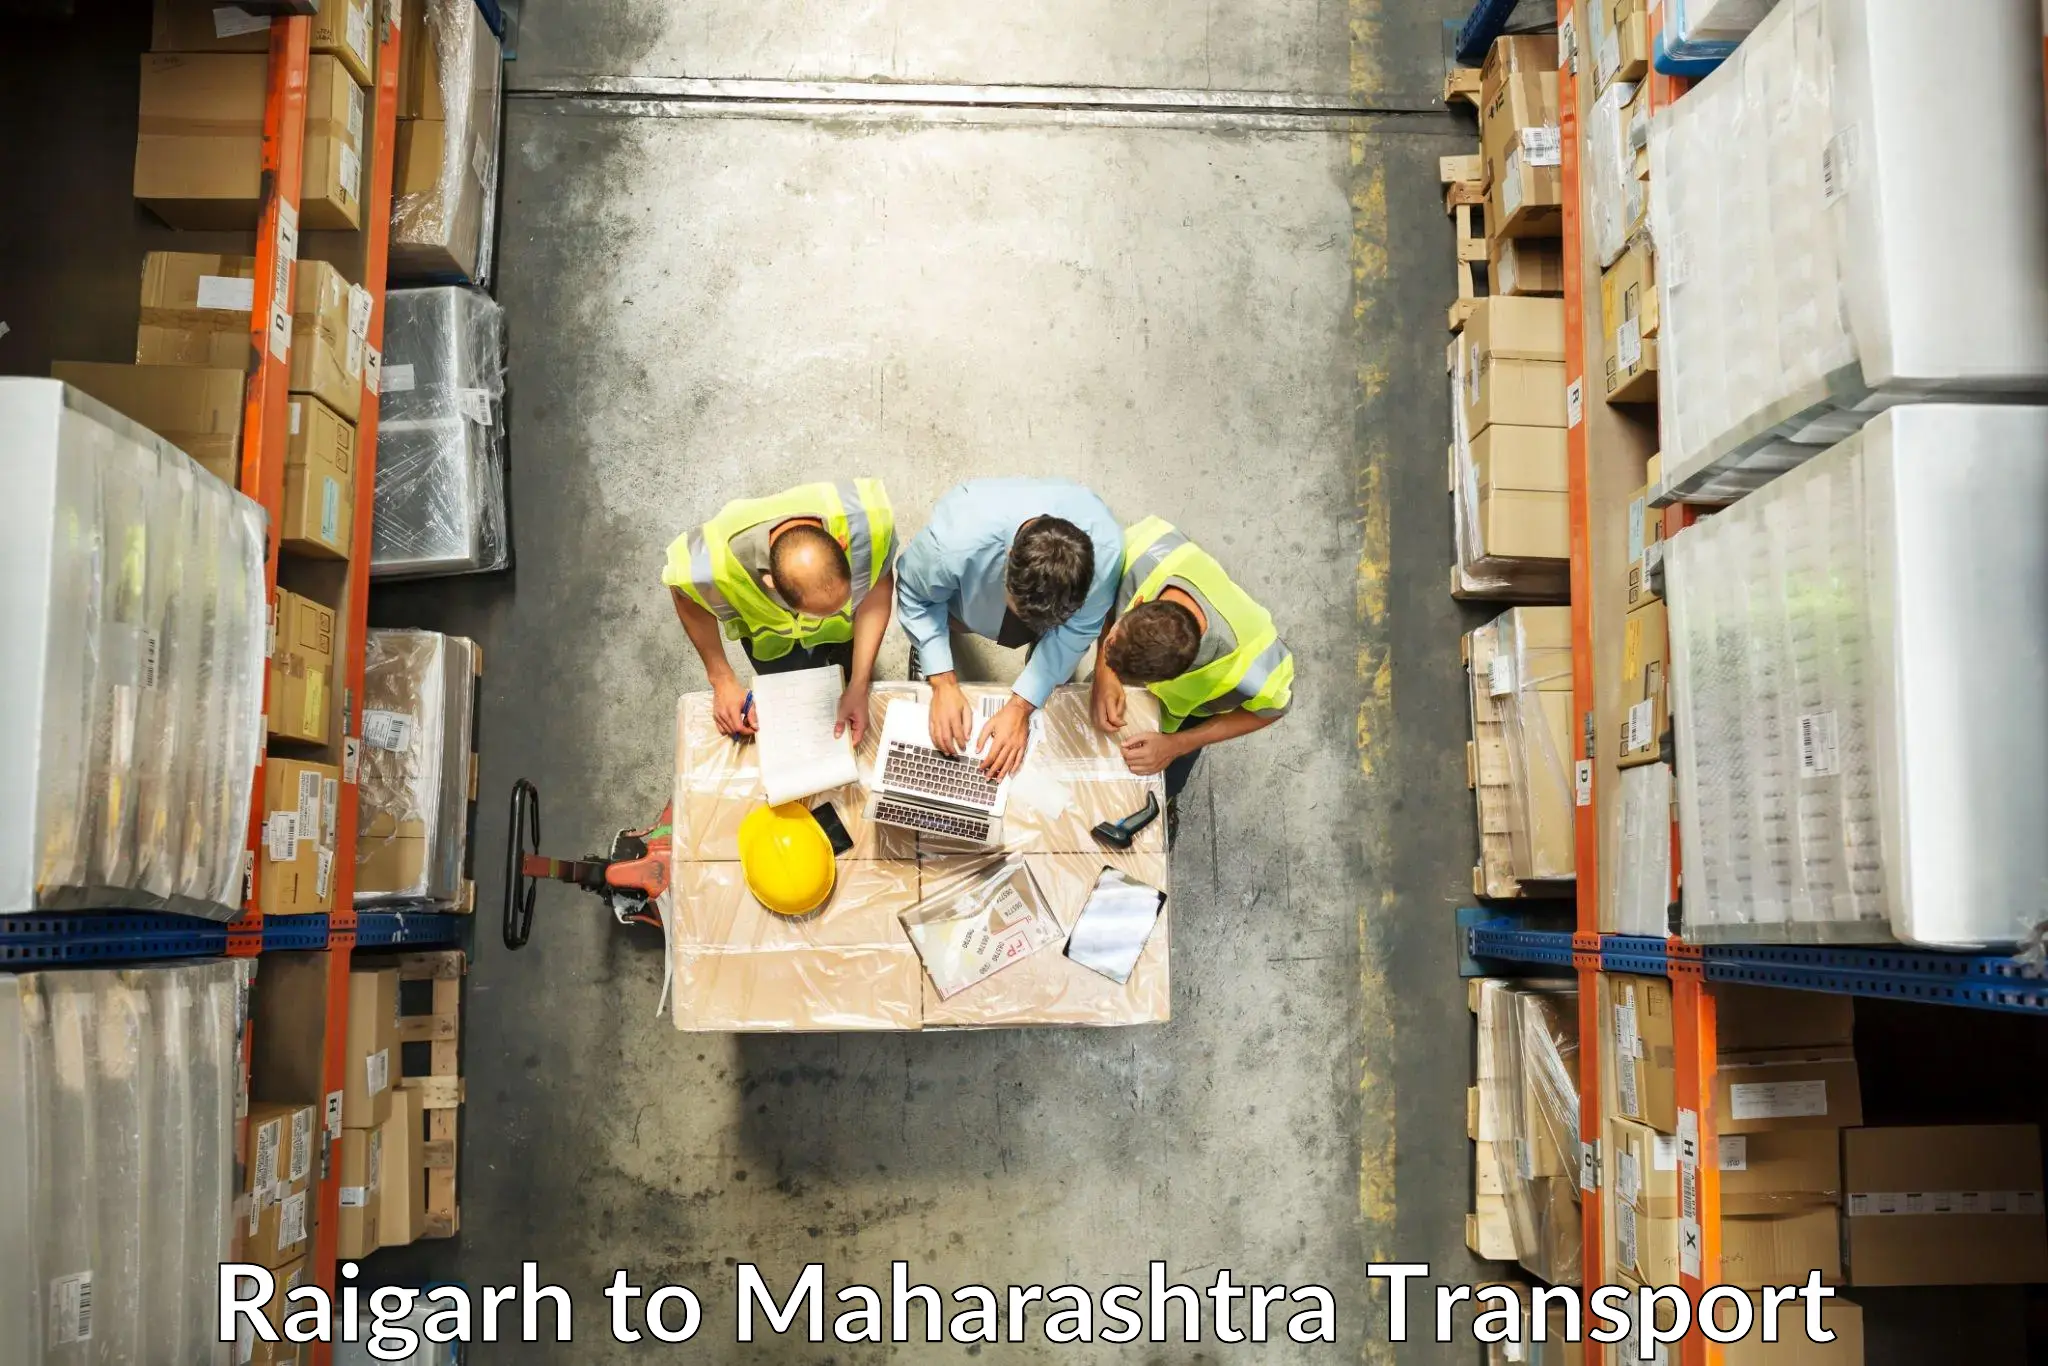 Bike shipping service Raigarh to Maharashtra